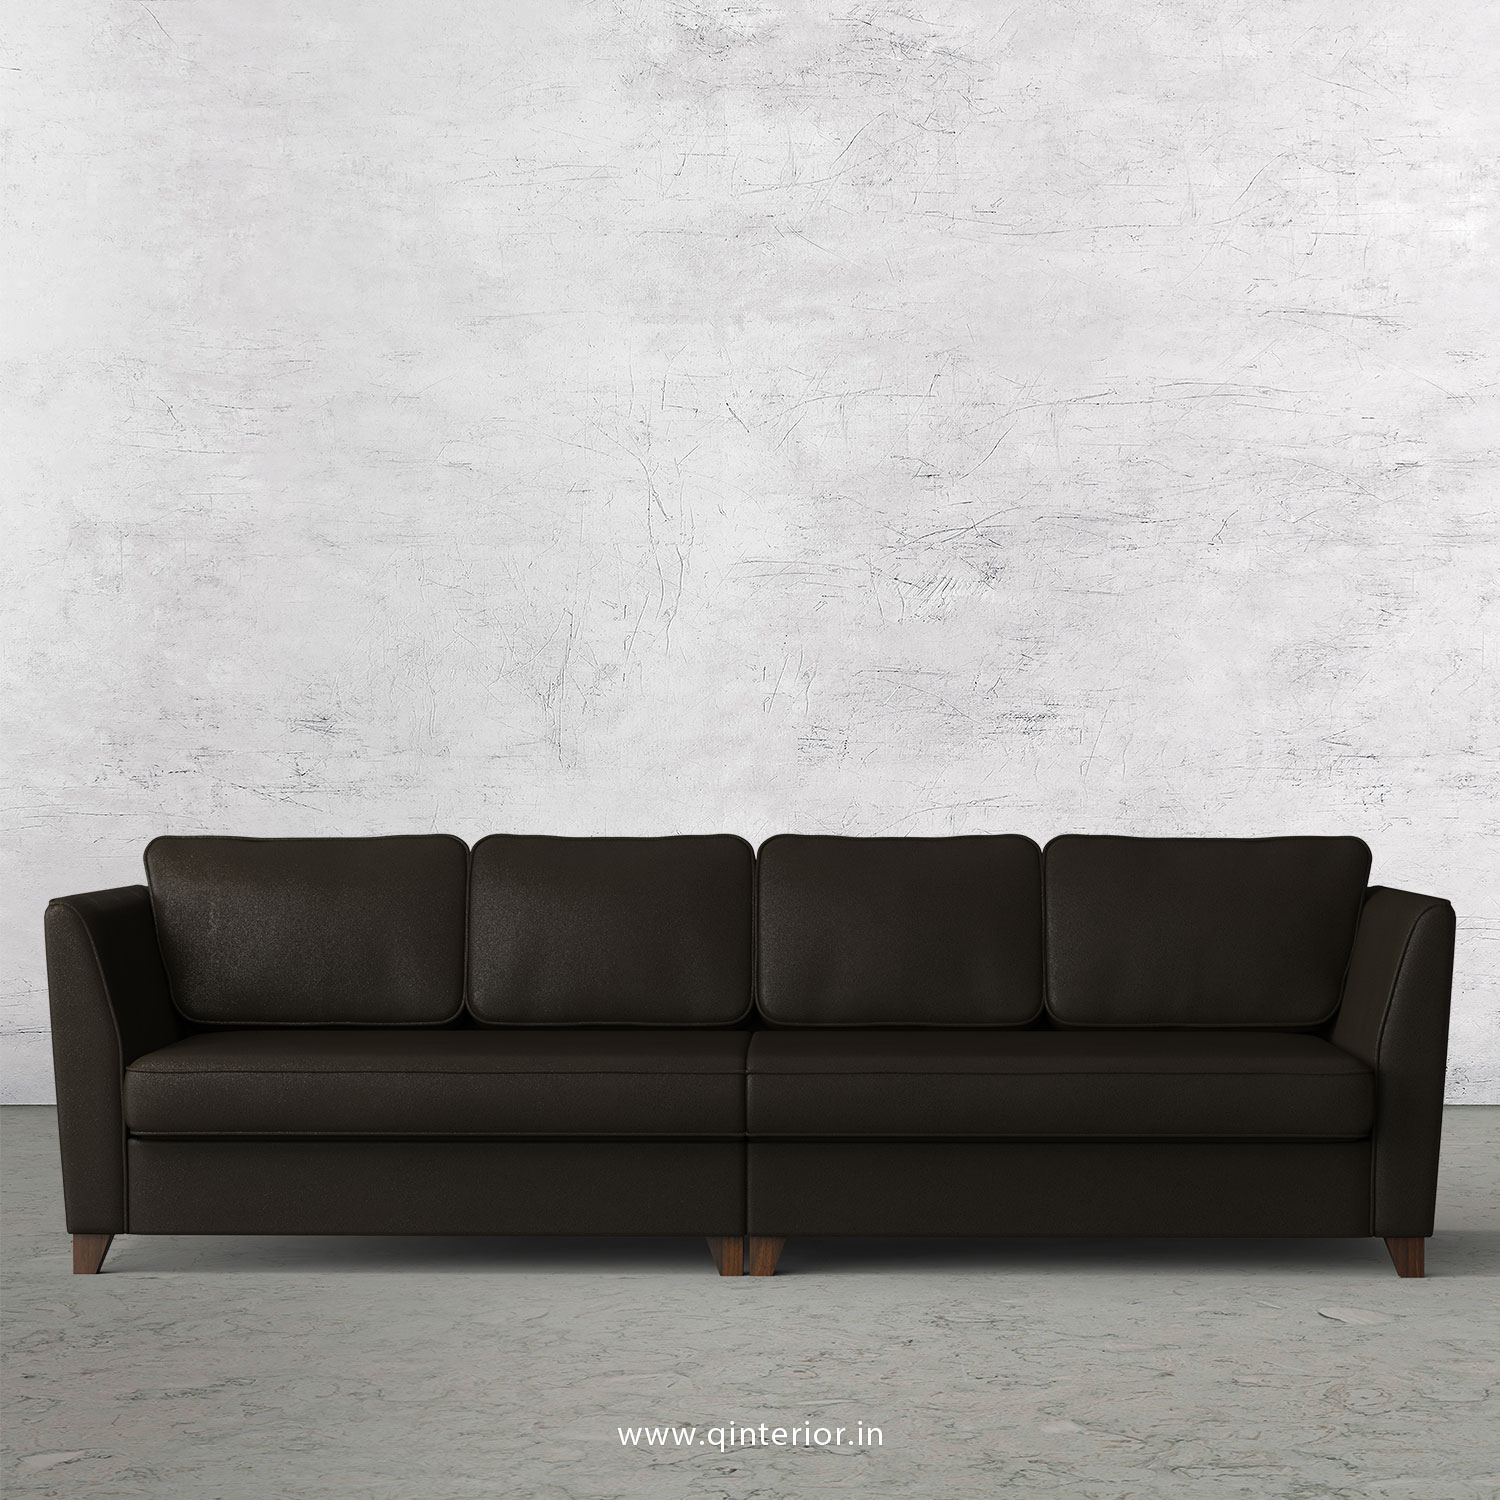 Kingstone 4 Seater Sofa in Fab Leather Fabric - SFA004 FL11